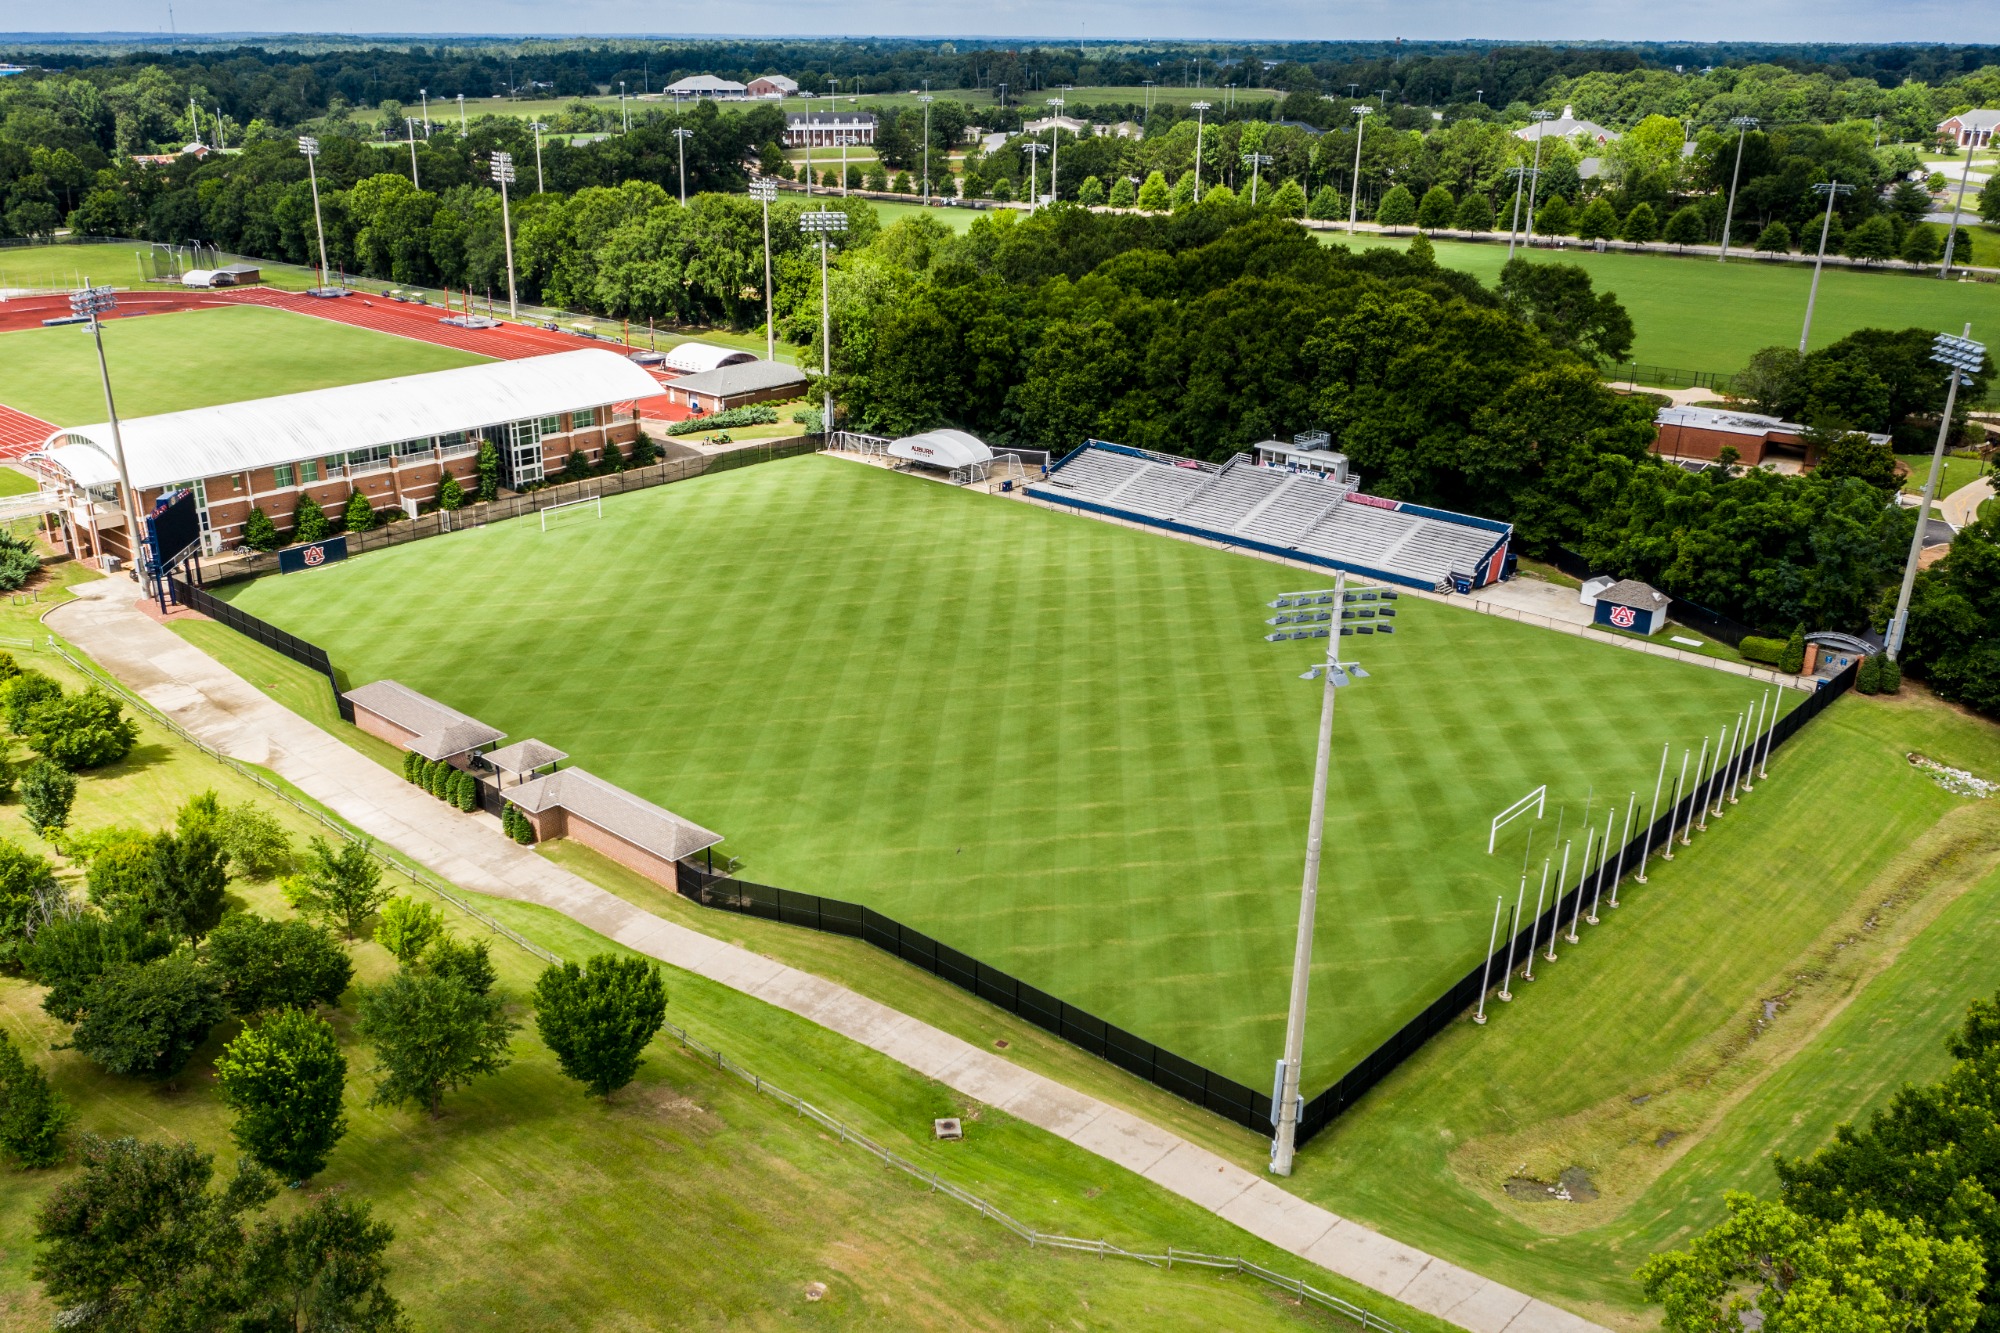 Jun 23, 2020; Auburn, AL, USA; View during a facility photo shoot at Soccer Facility. Mandatory Credit: Shanna Lockwood/AU Athletics